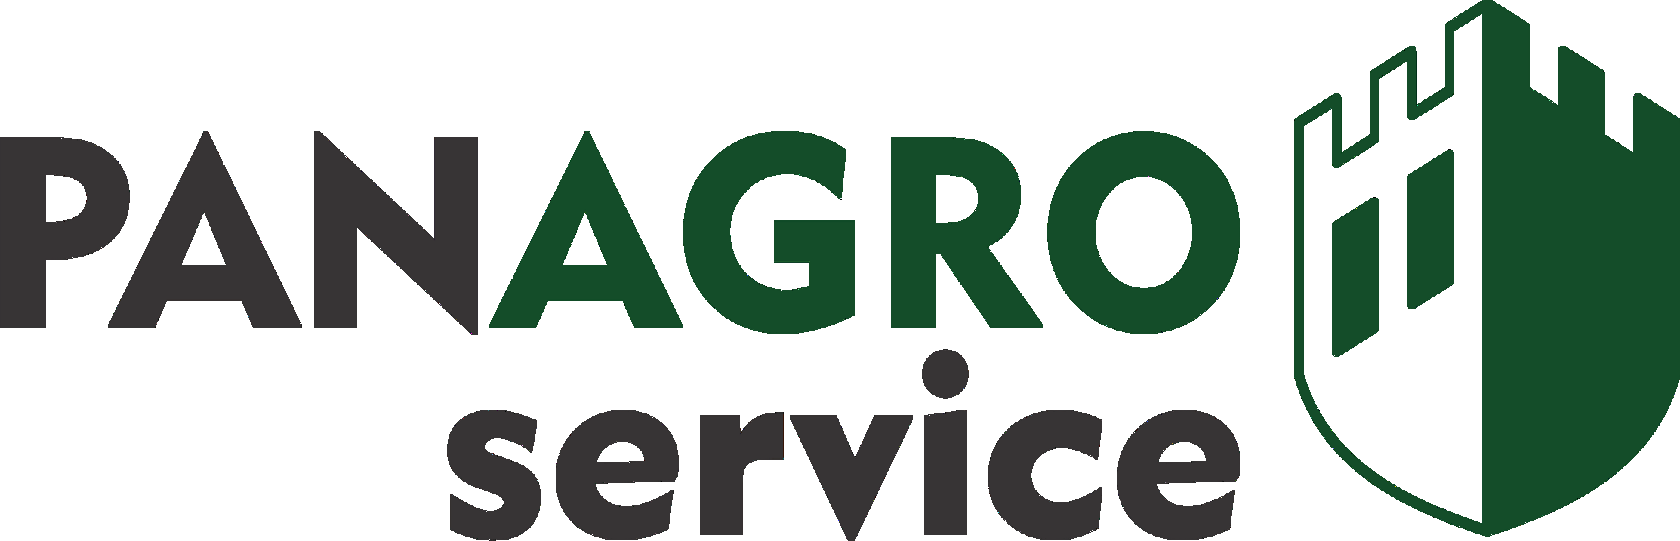 PANAGRO_service_logo